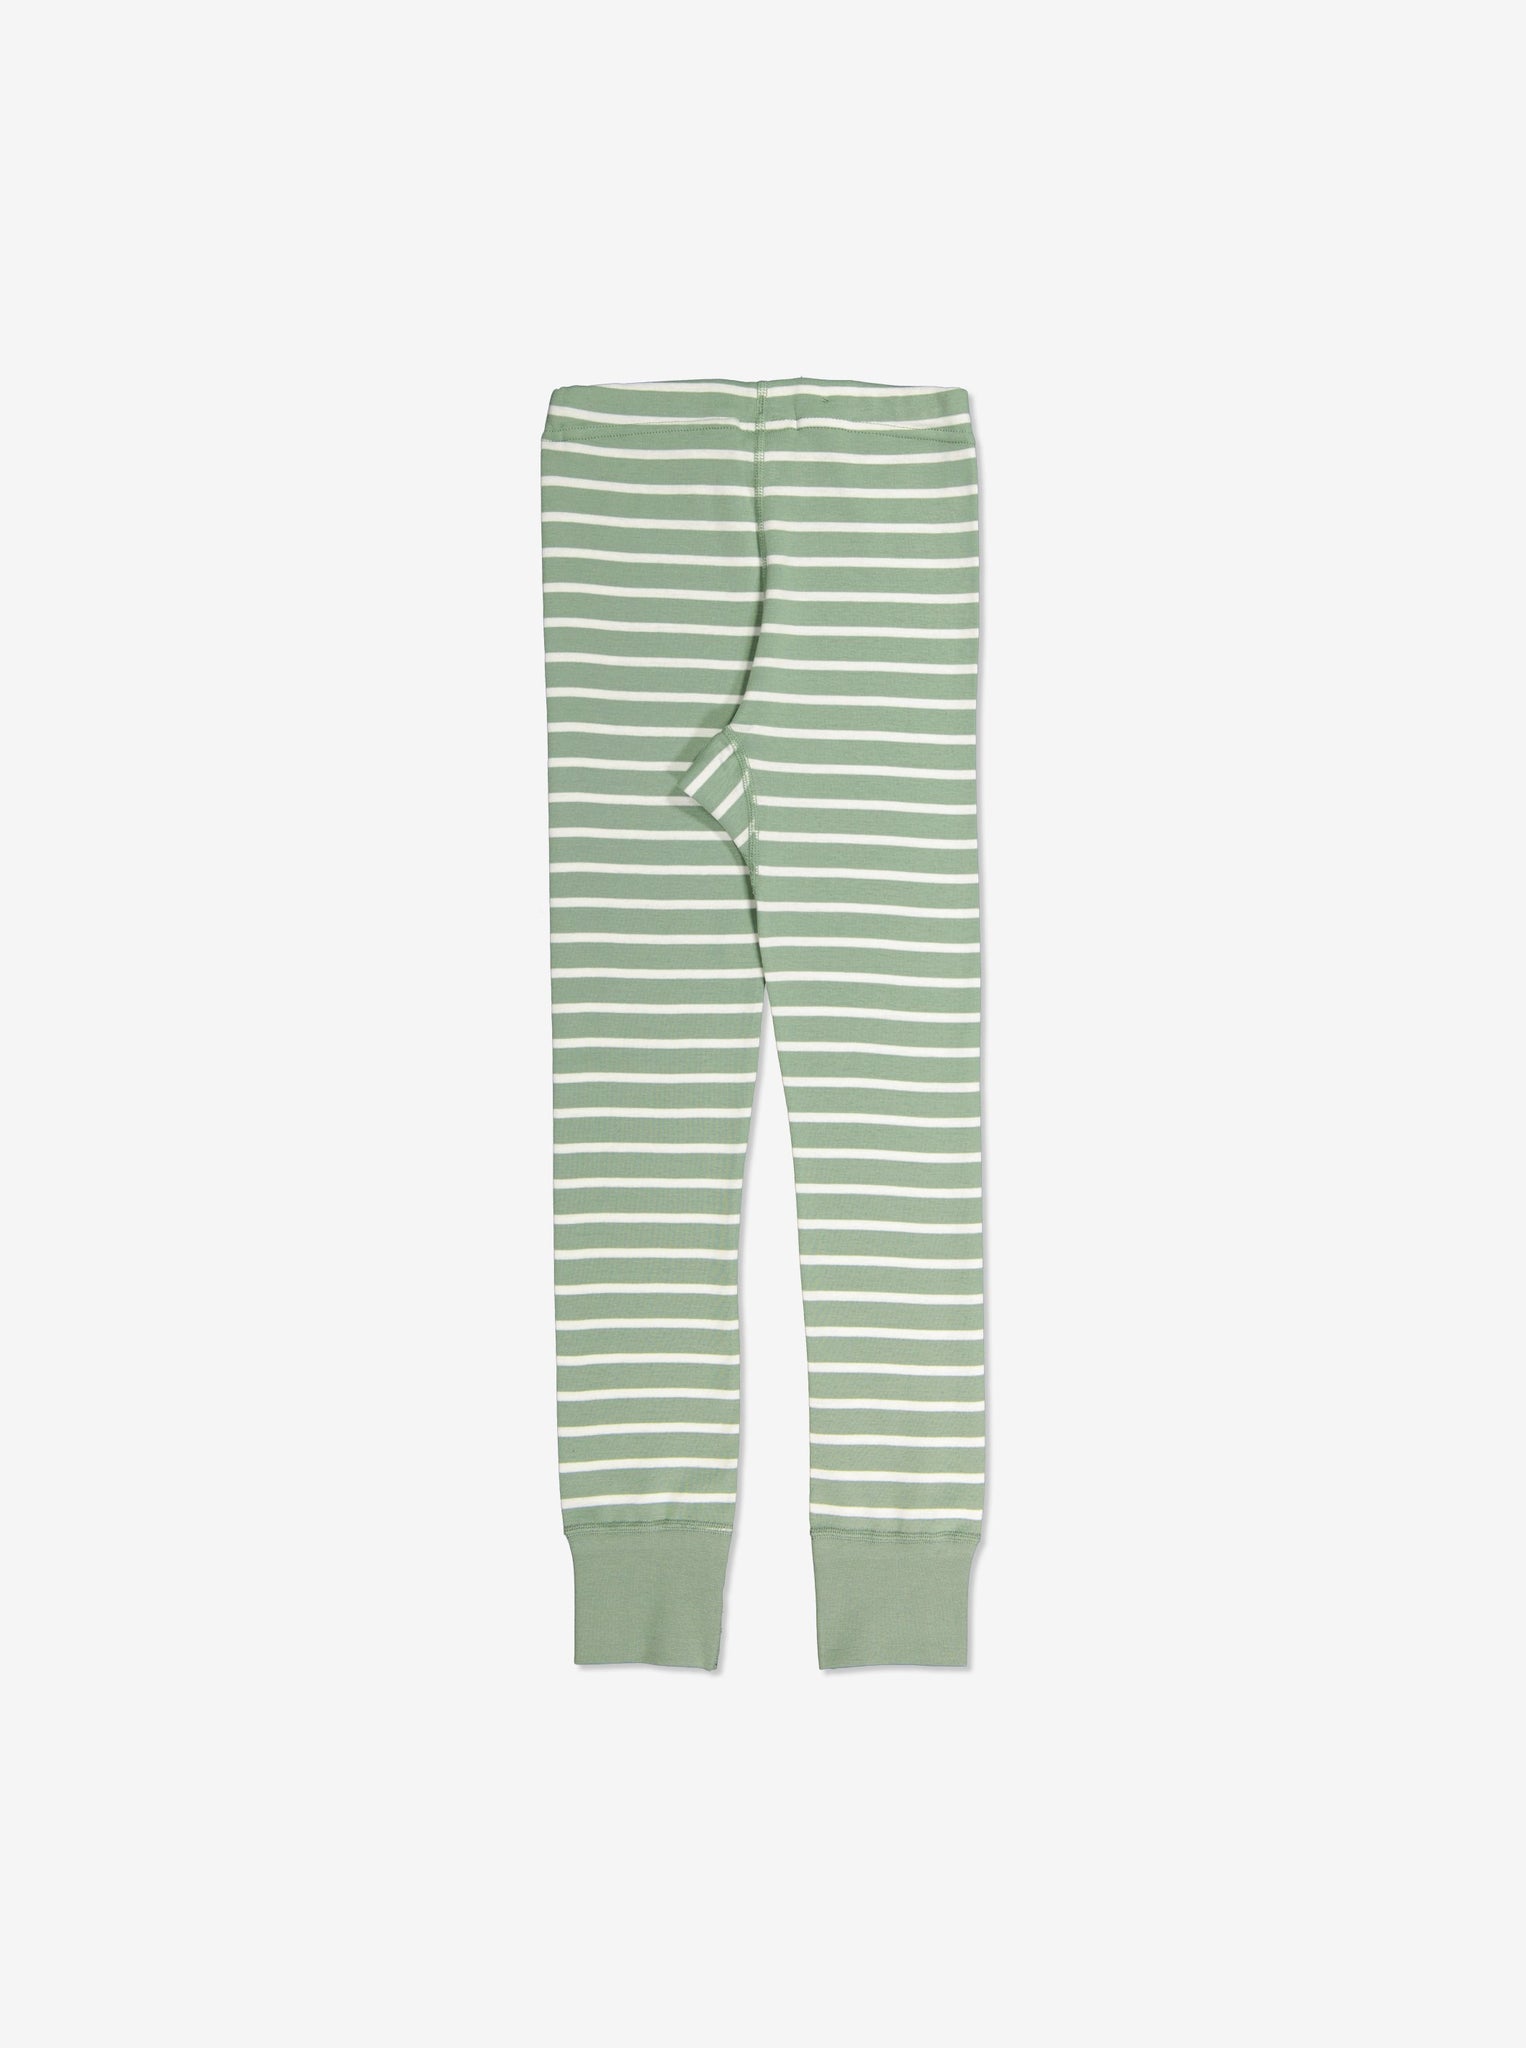  Organic Striped Green Kids Leggings from Polarn O. Pyret Kidswear. Made with 100% organic cotton.